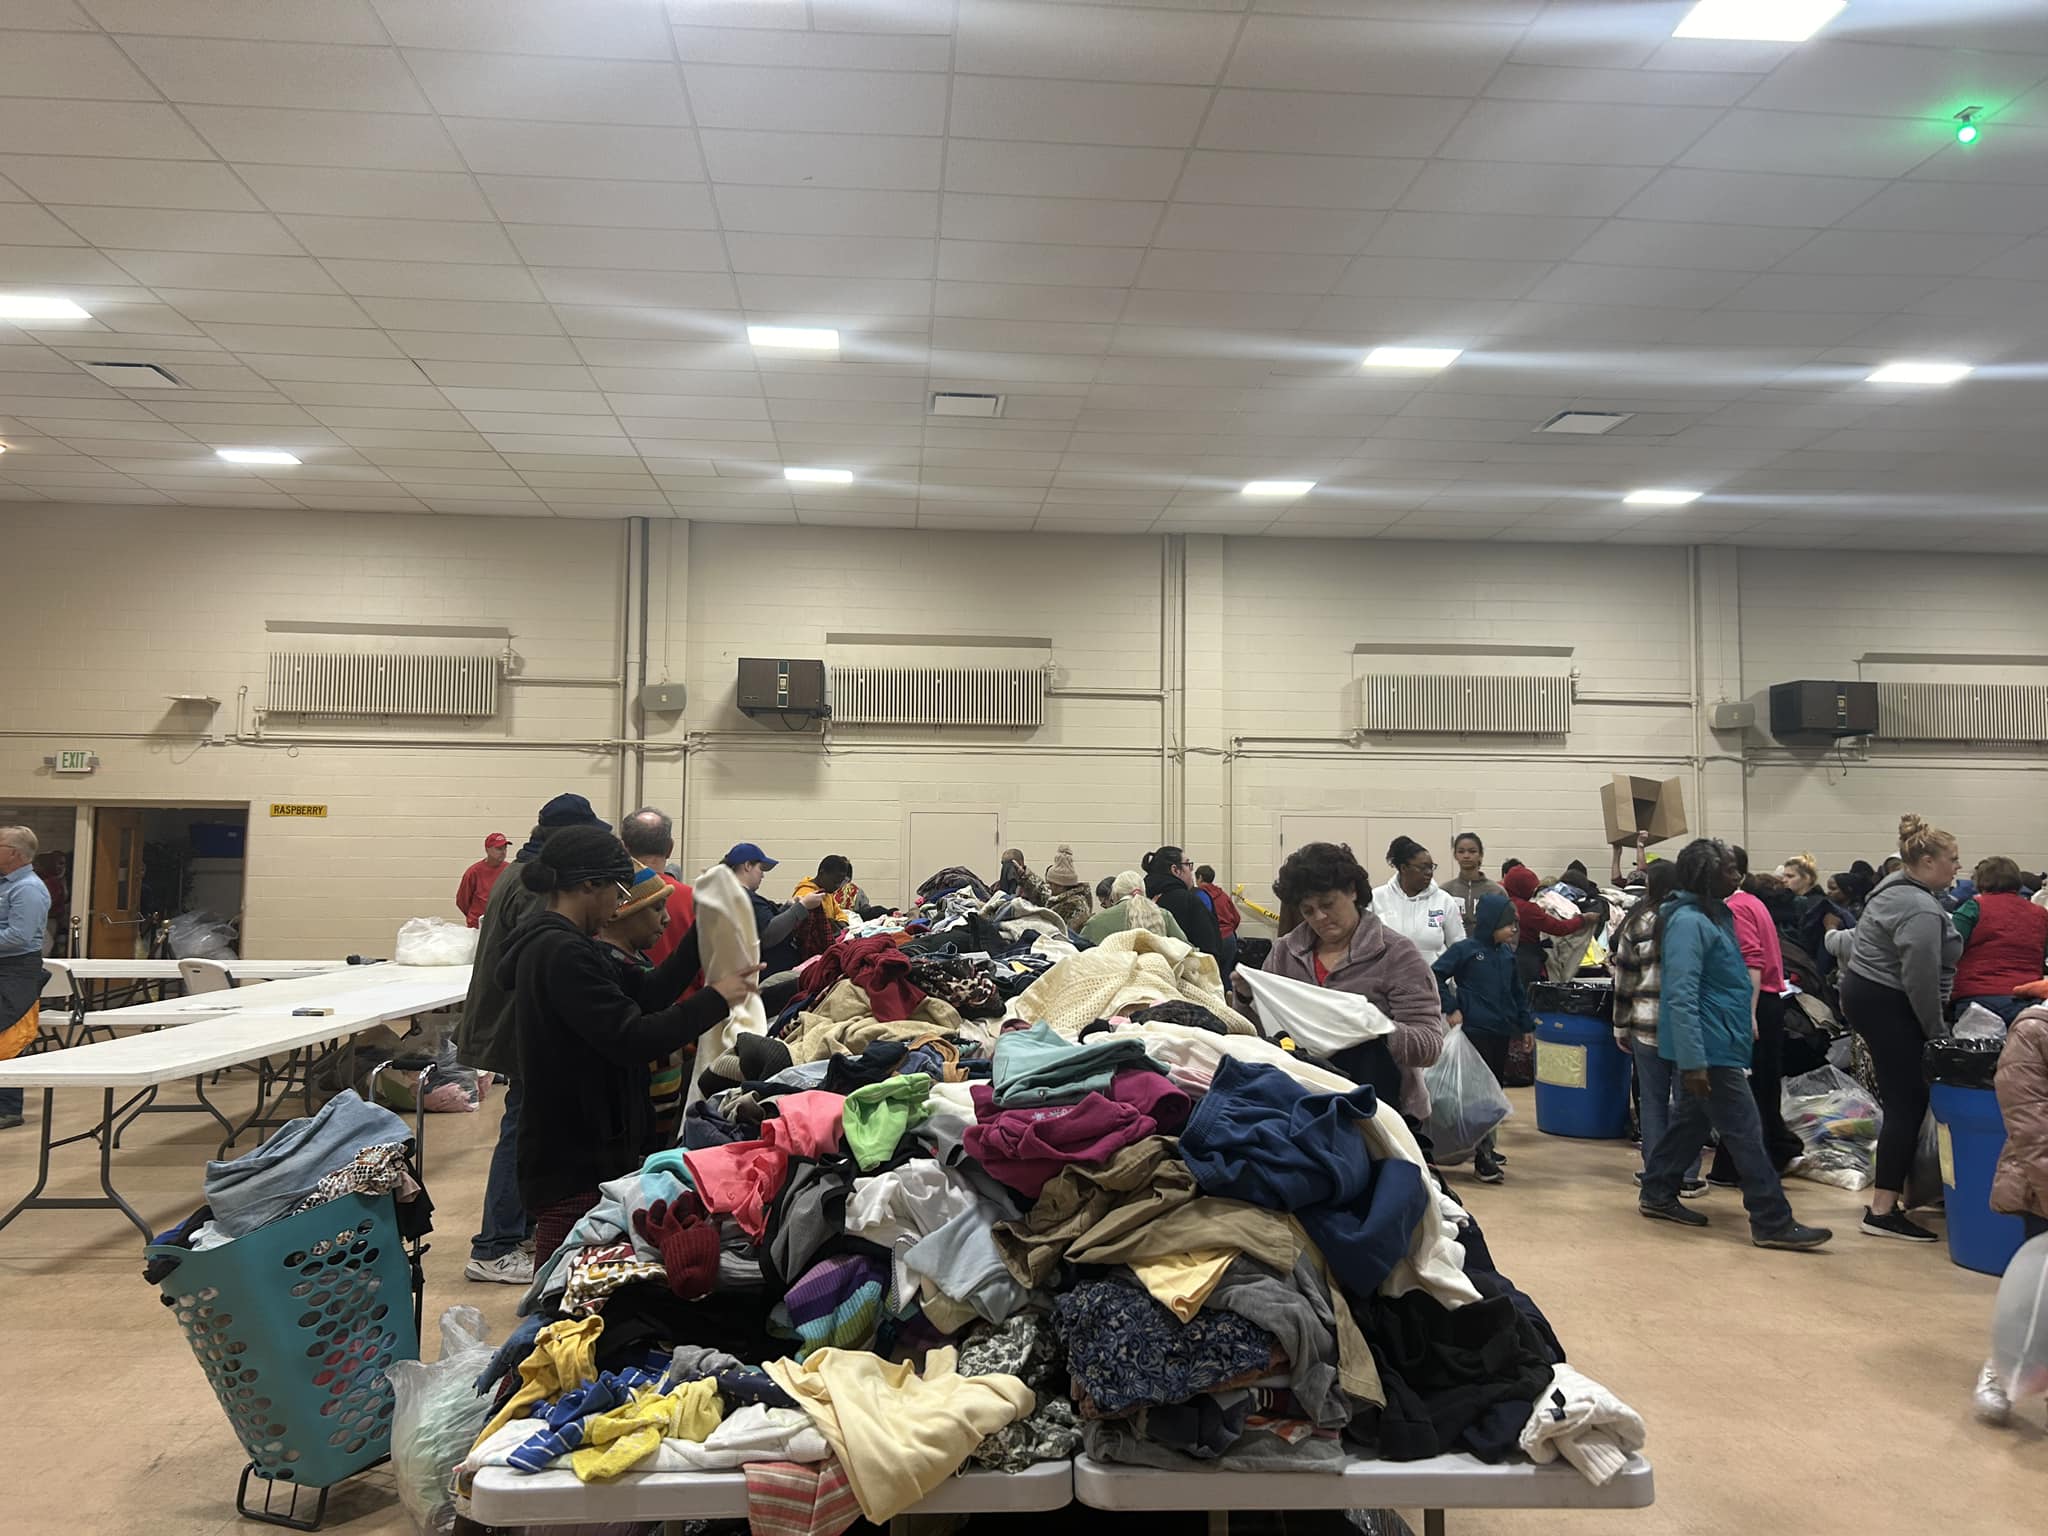 St. Paul's Center Hosts Clothing Distribution